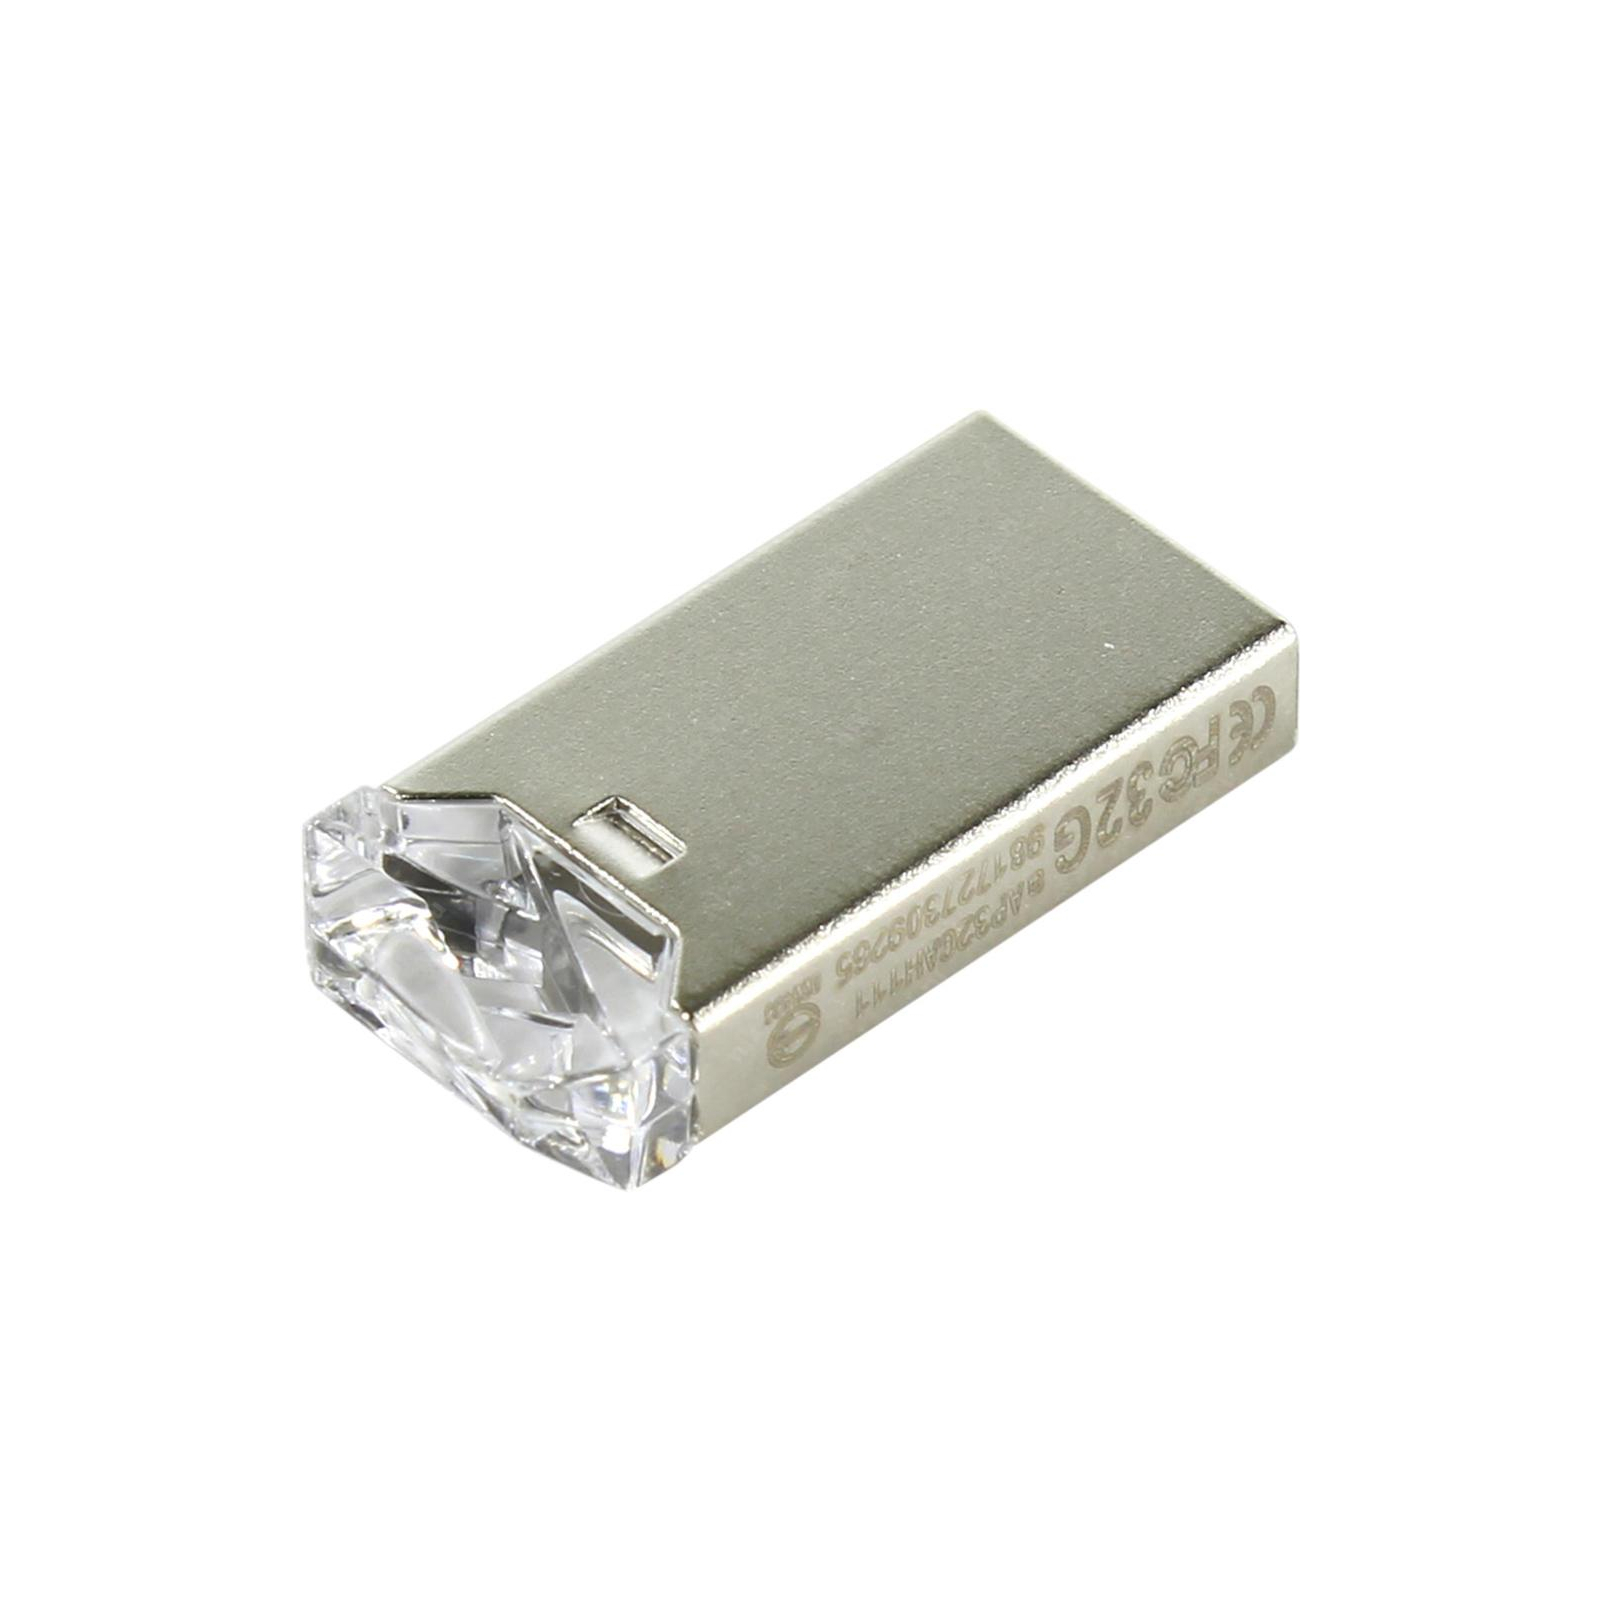 USB флеш накопитель Apacer 64GB AH111 Blue USB 2.0 (AP64GAH111U-1) изображение 3